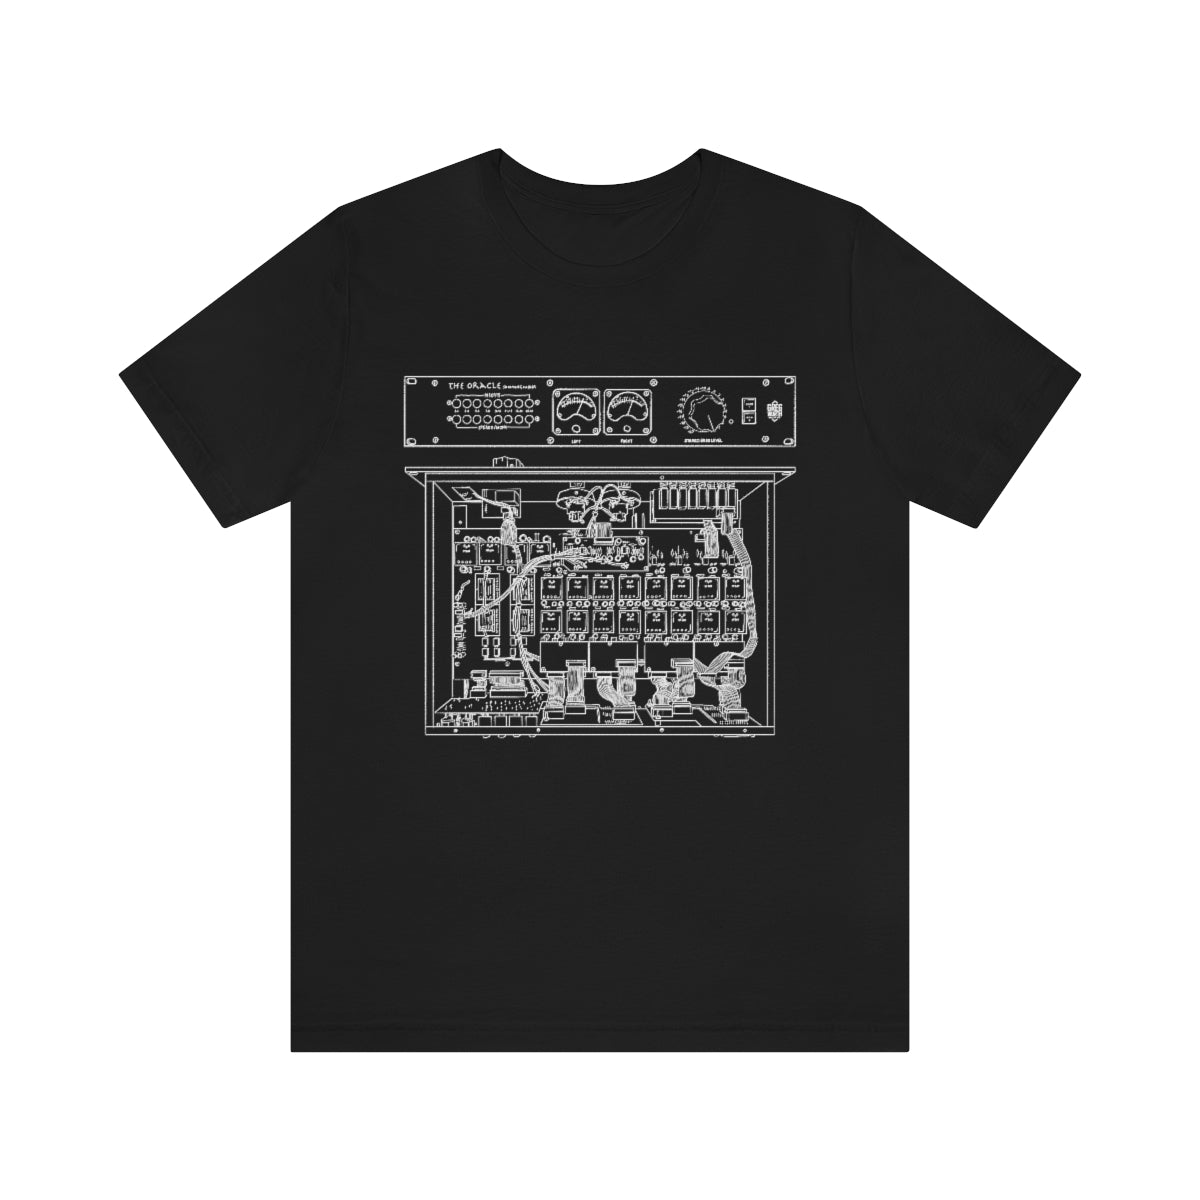 The Oracle Summing Mixer Blueprint T-Shirt Black